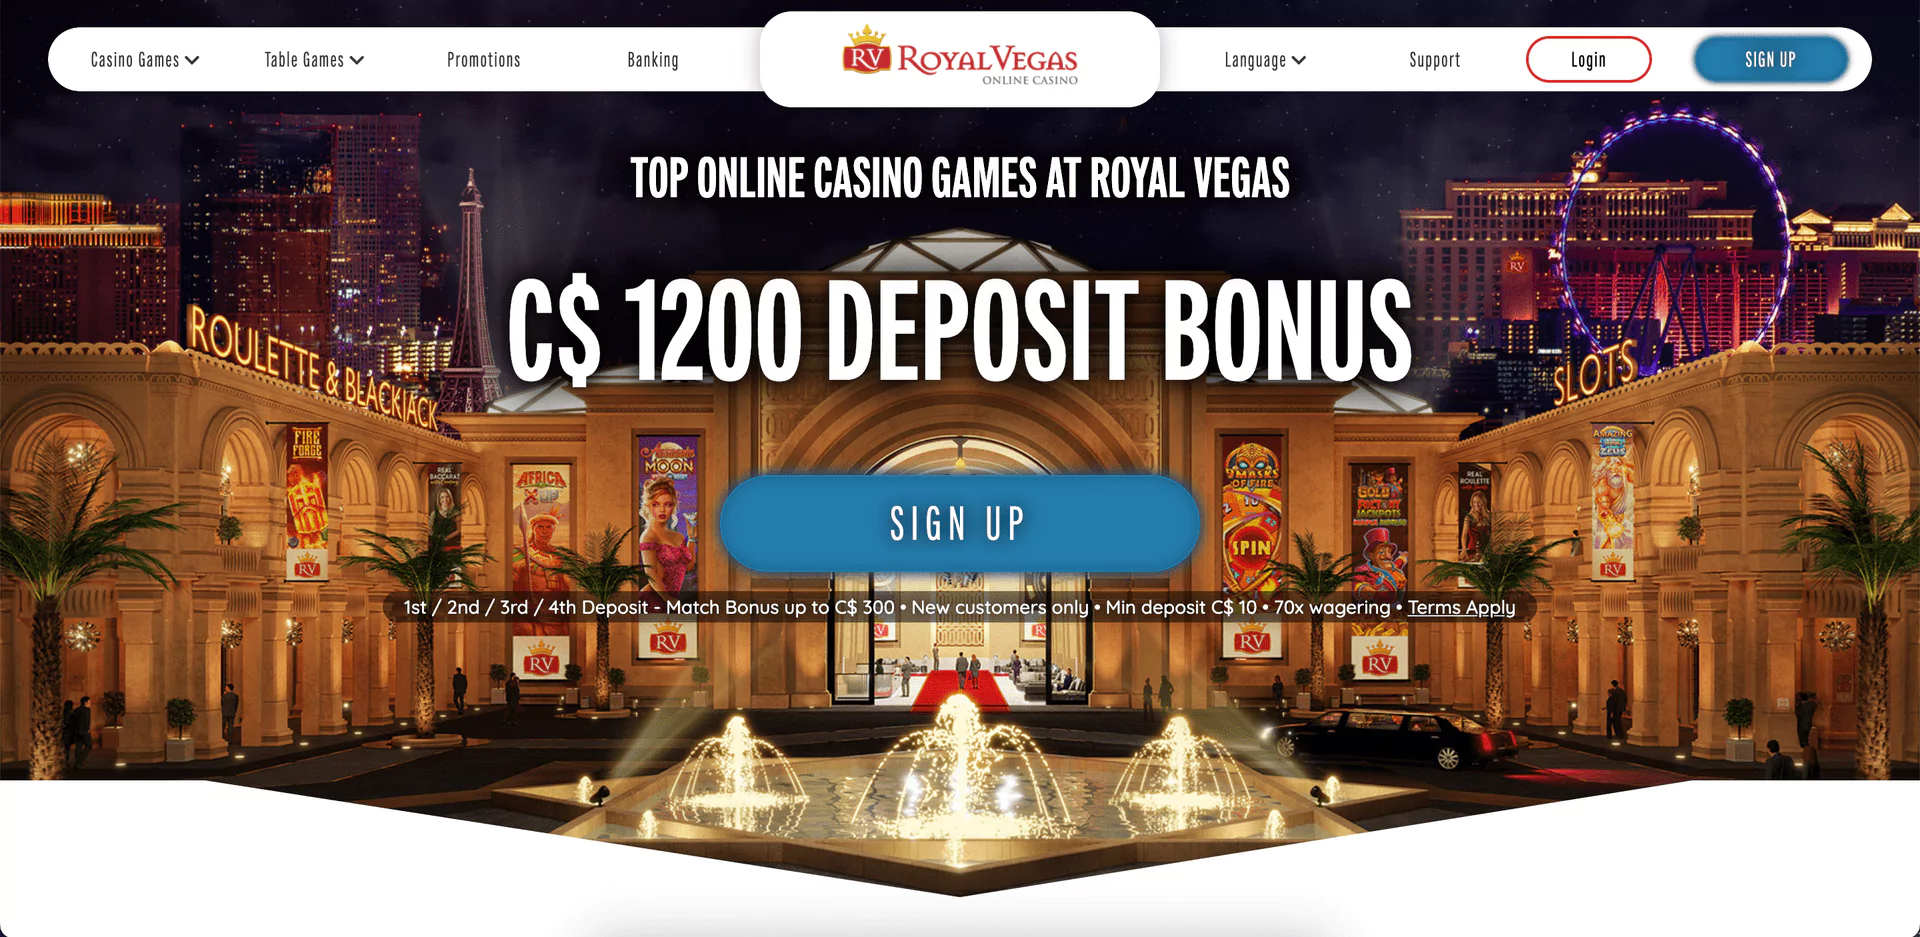 Bonuses at Royal Vegas Casino